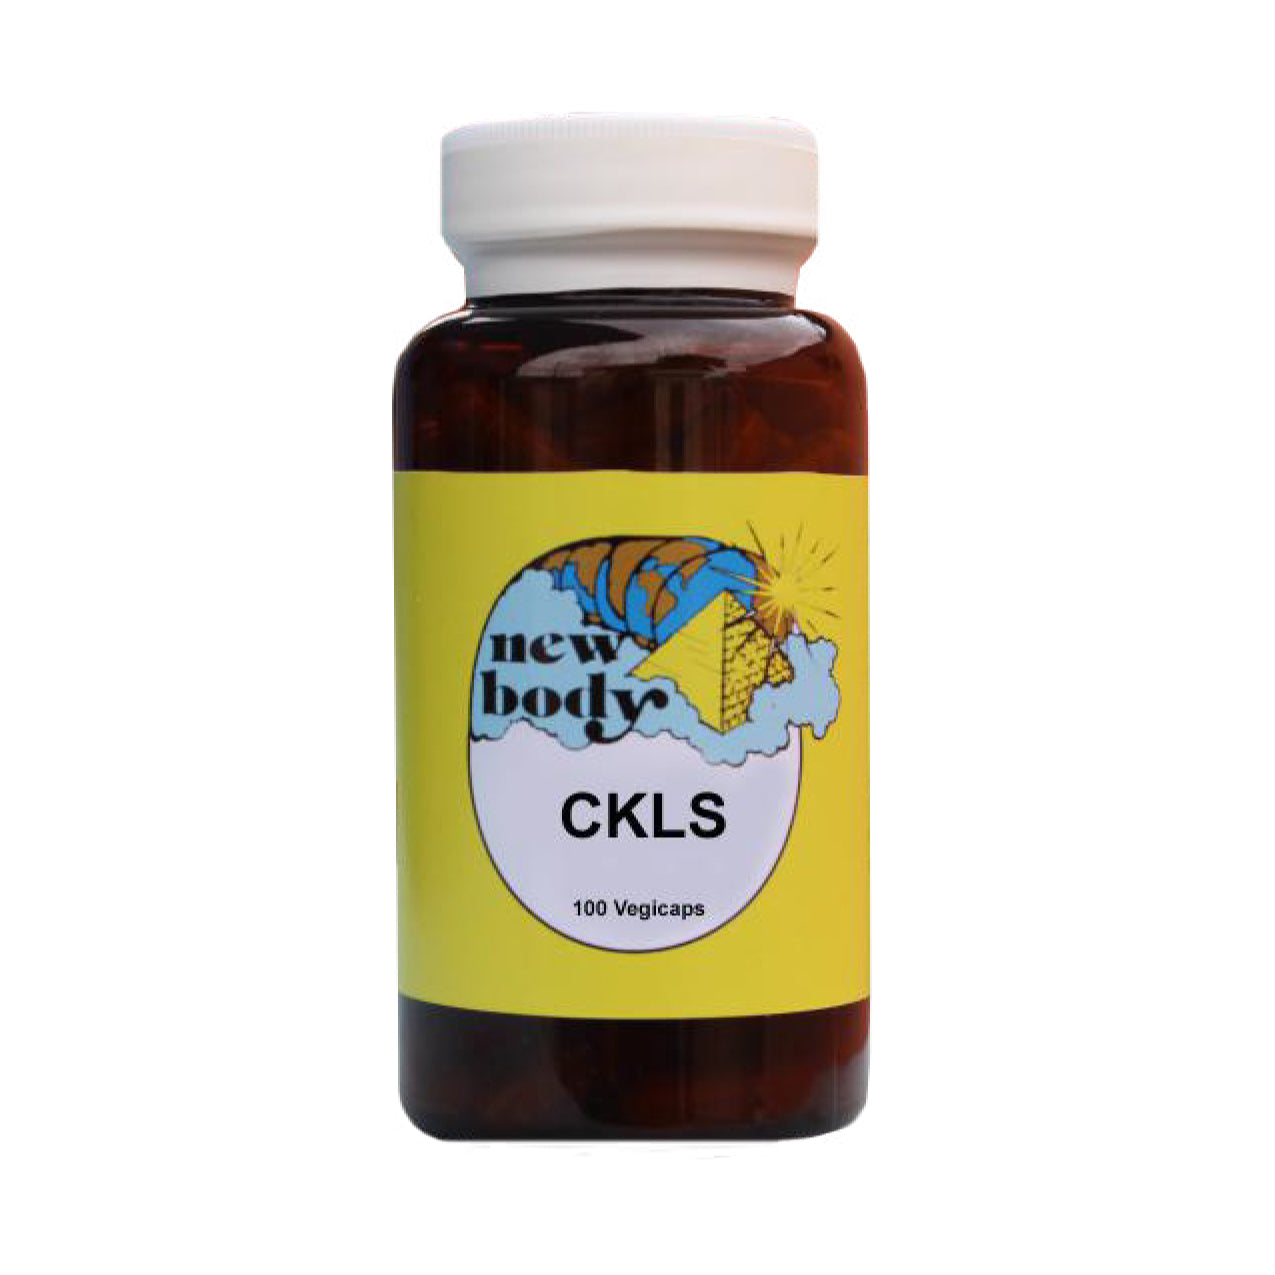 CKLS (Colon, Kidney, Liver, Spleen) by New Body